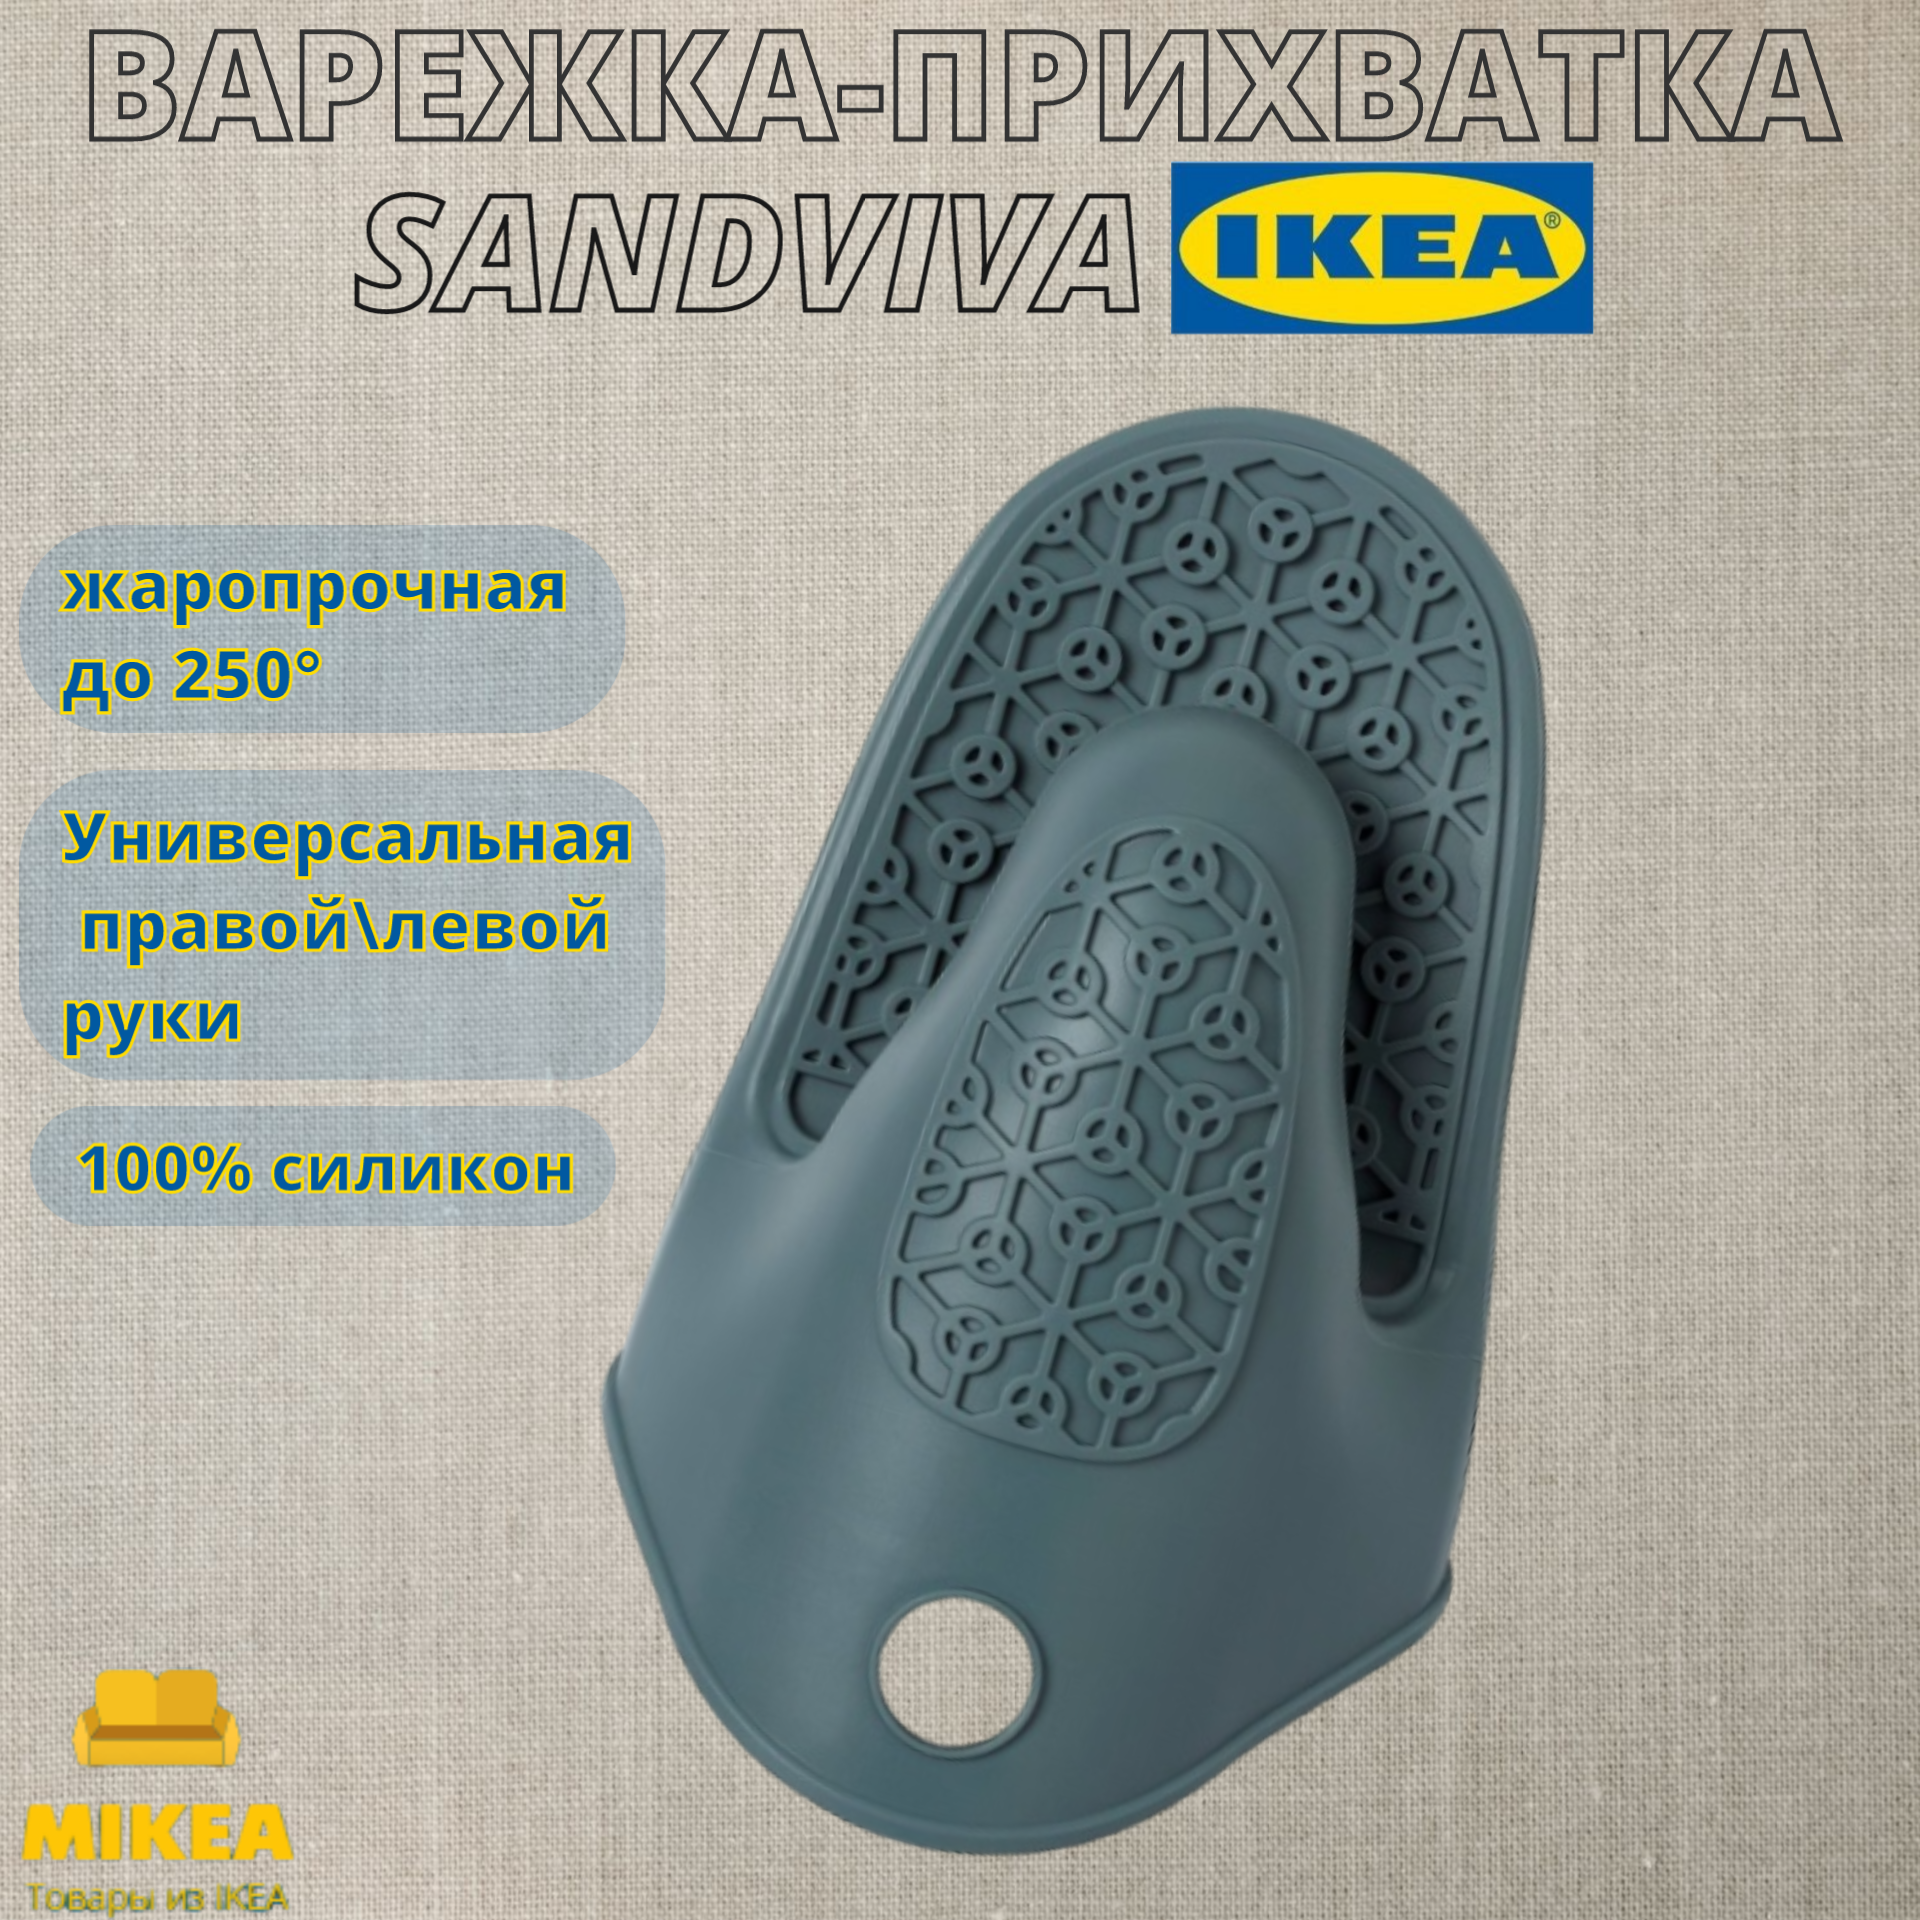 Варежка-прихватка силикон IKEA SANDVIVA сандвива